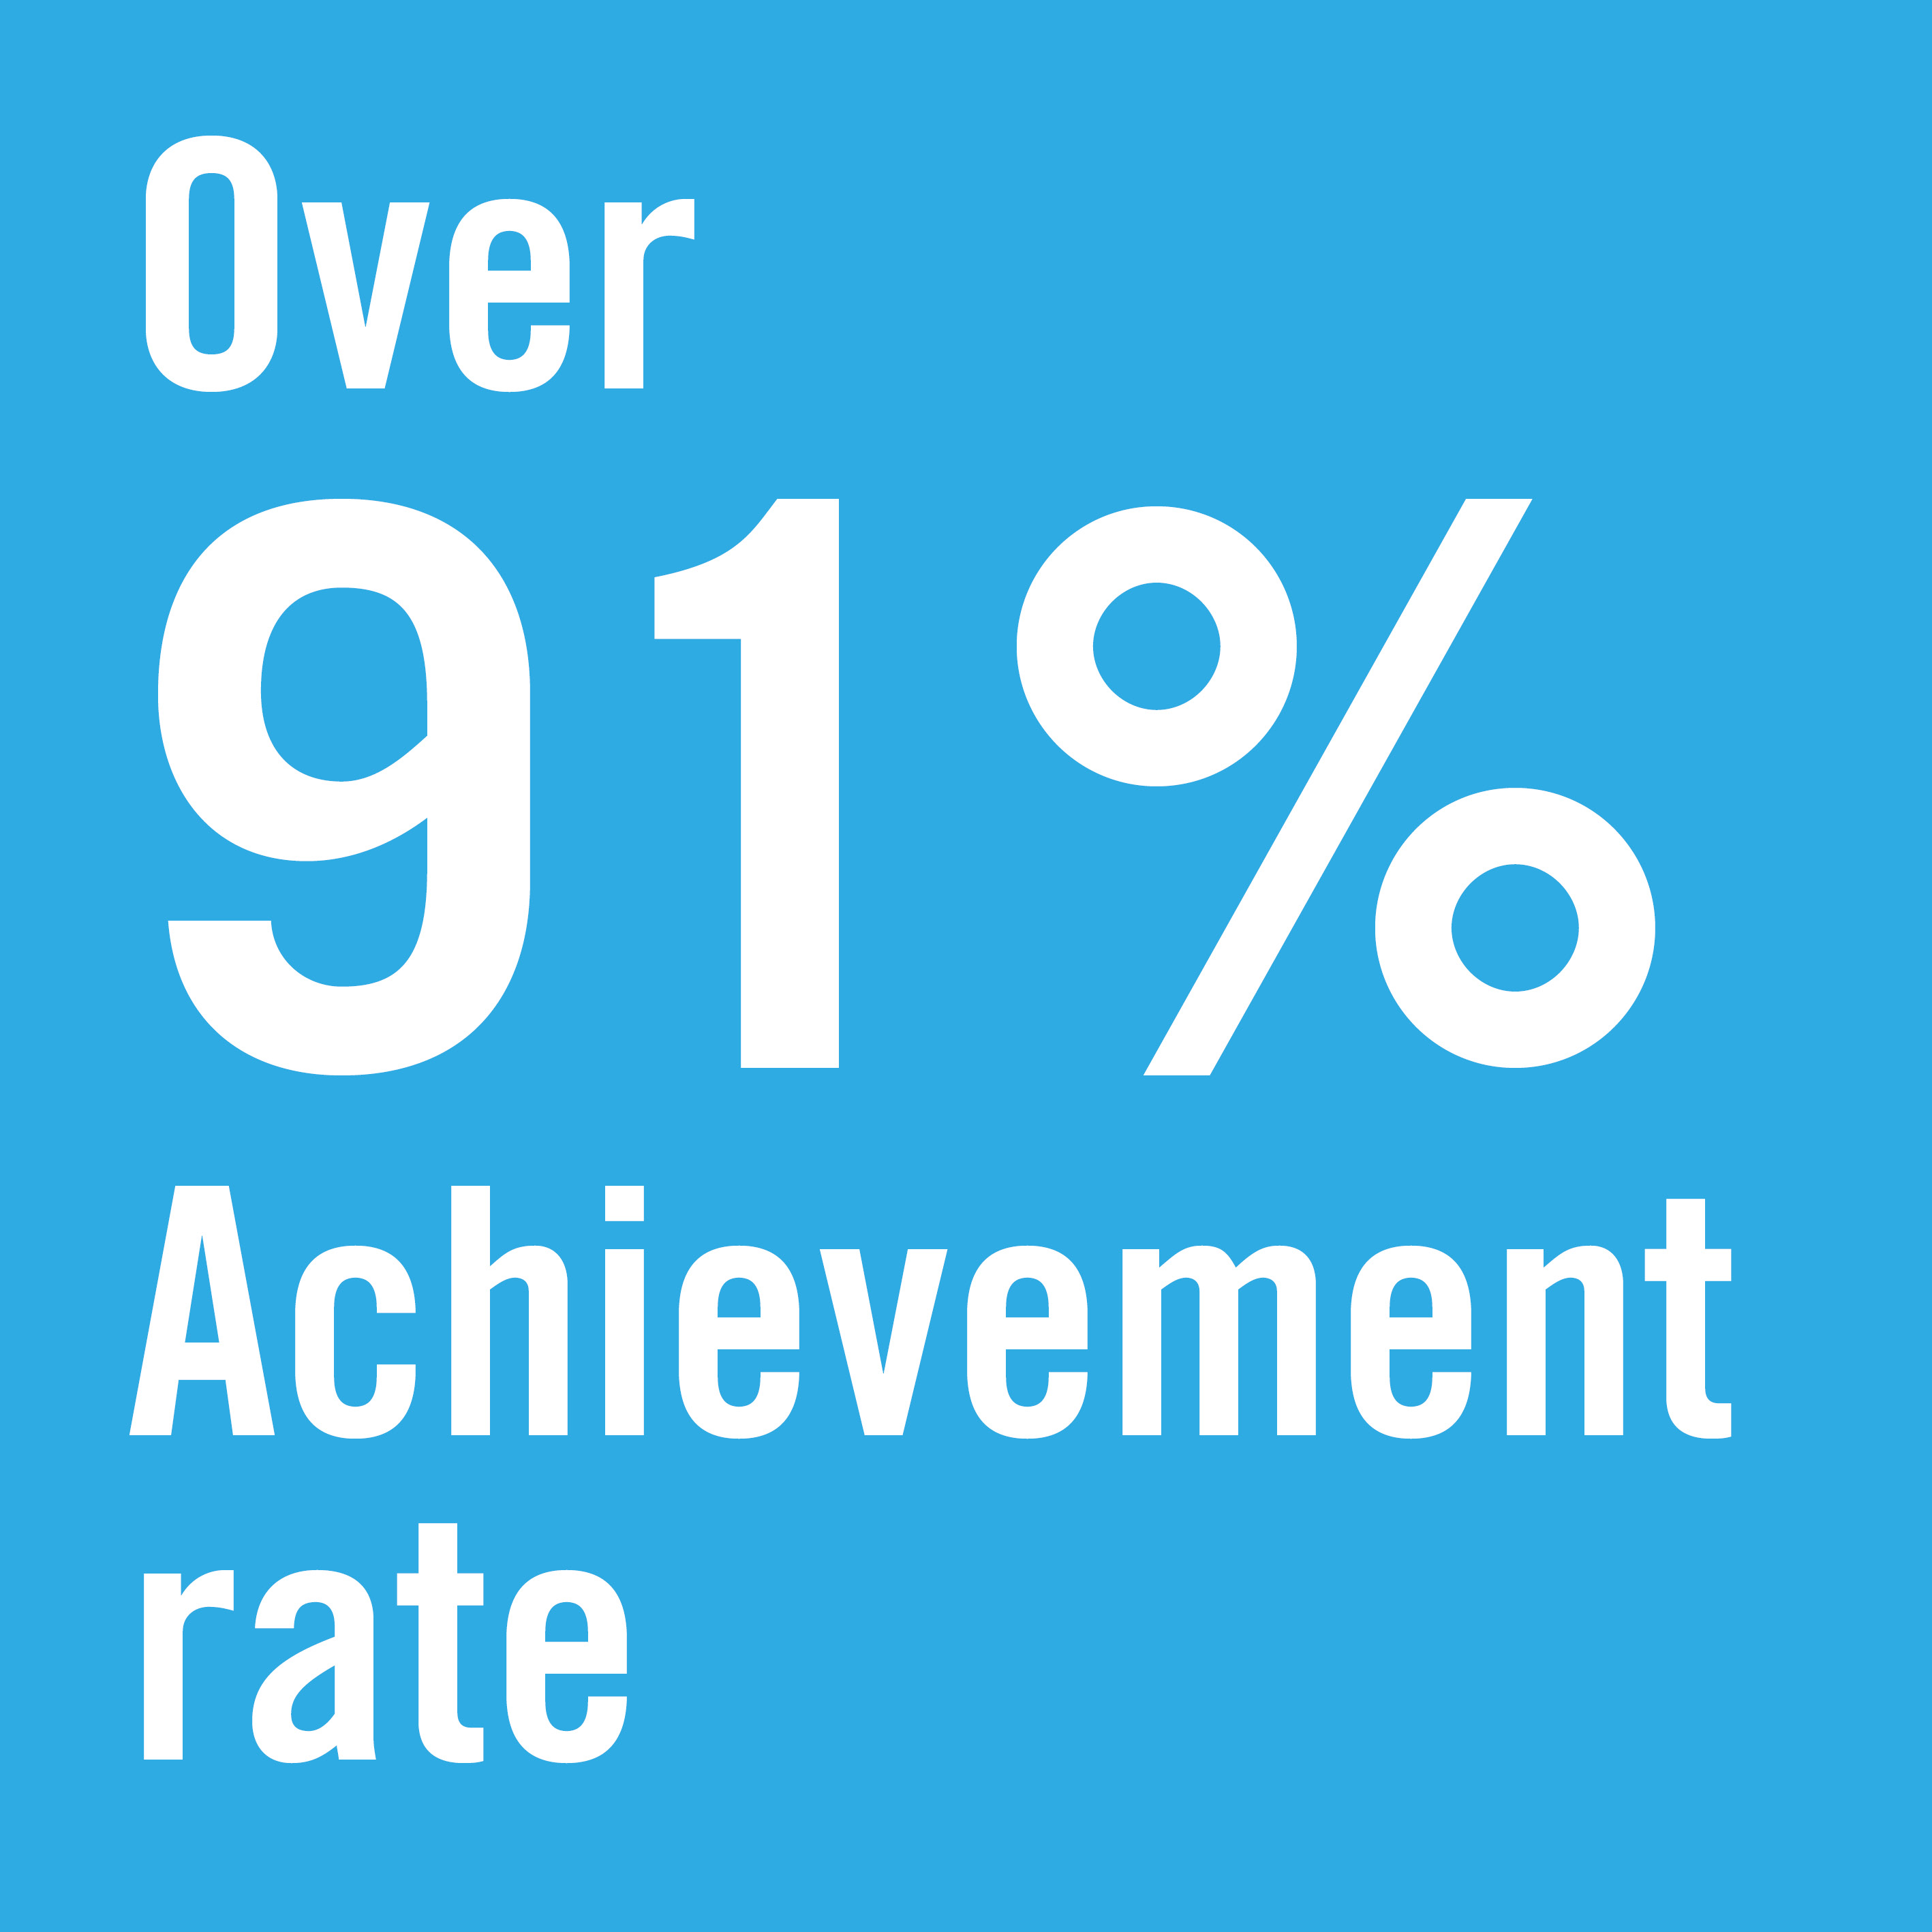 Over 90 percent achievement rate